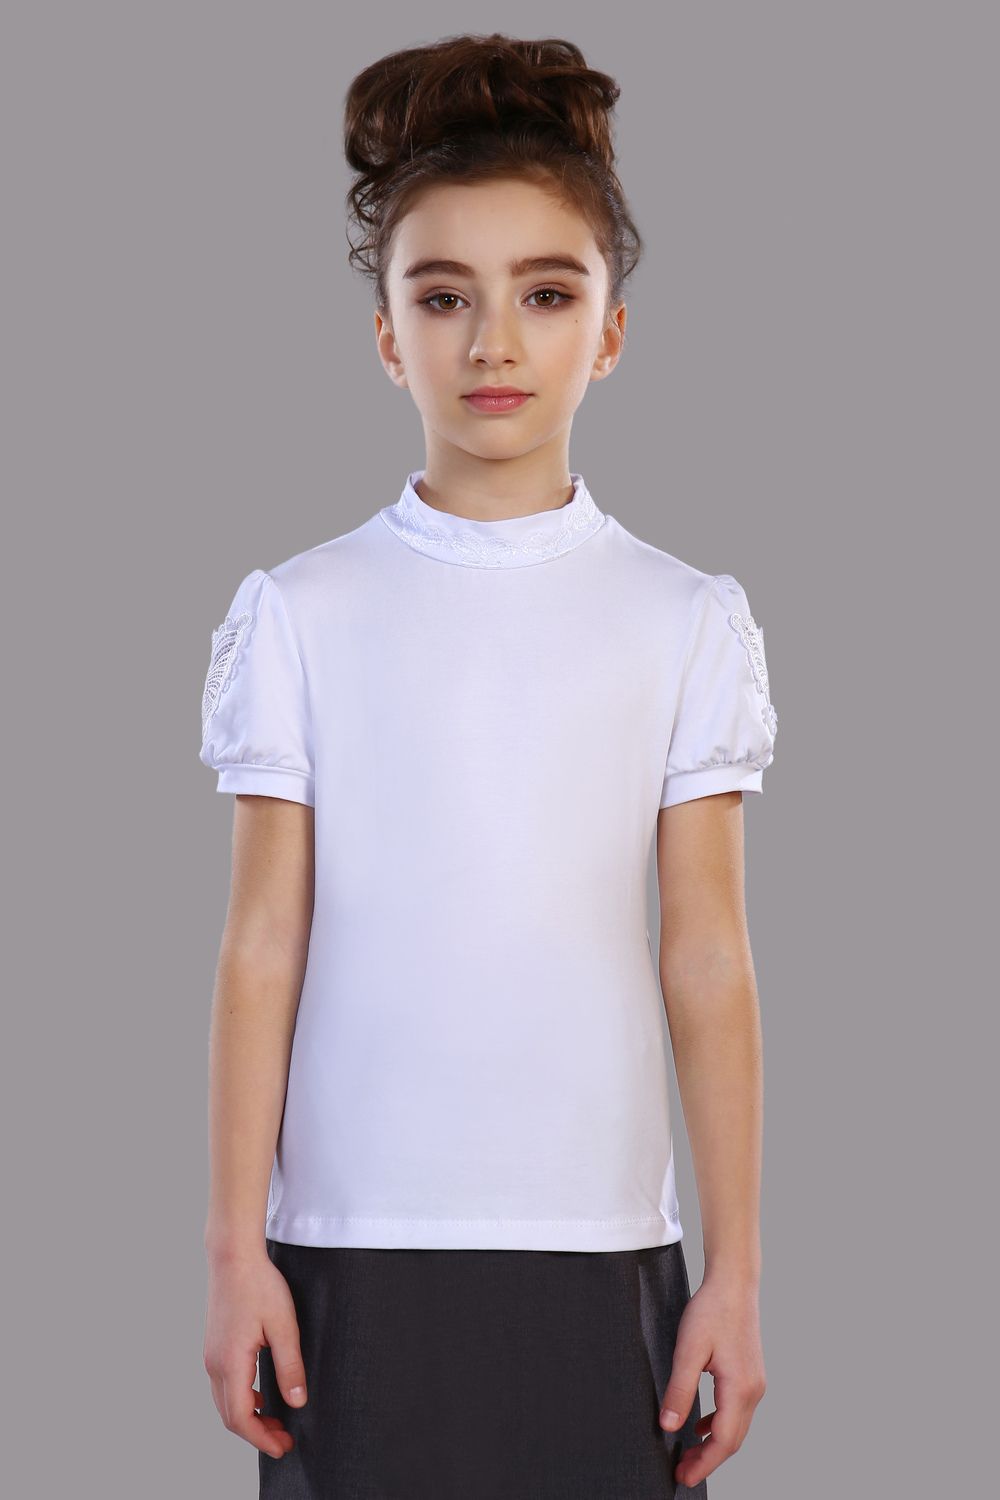 Блузка для девочки Бэлль Арт. 13133 - белый